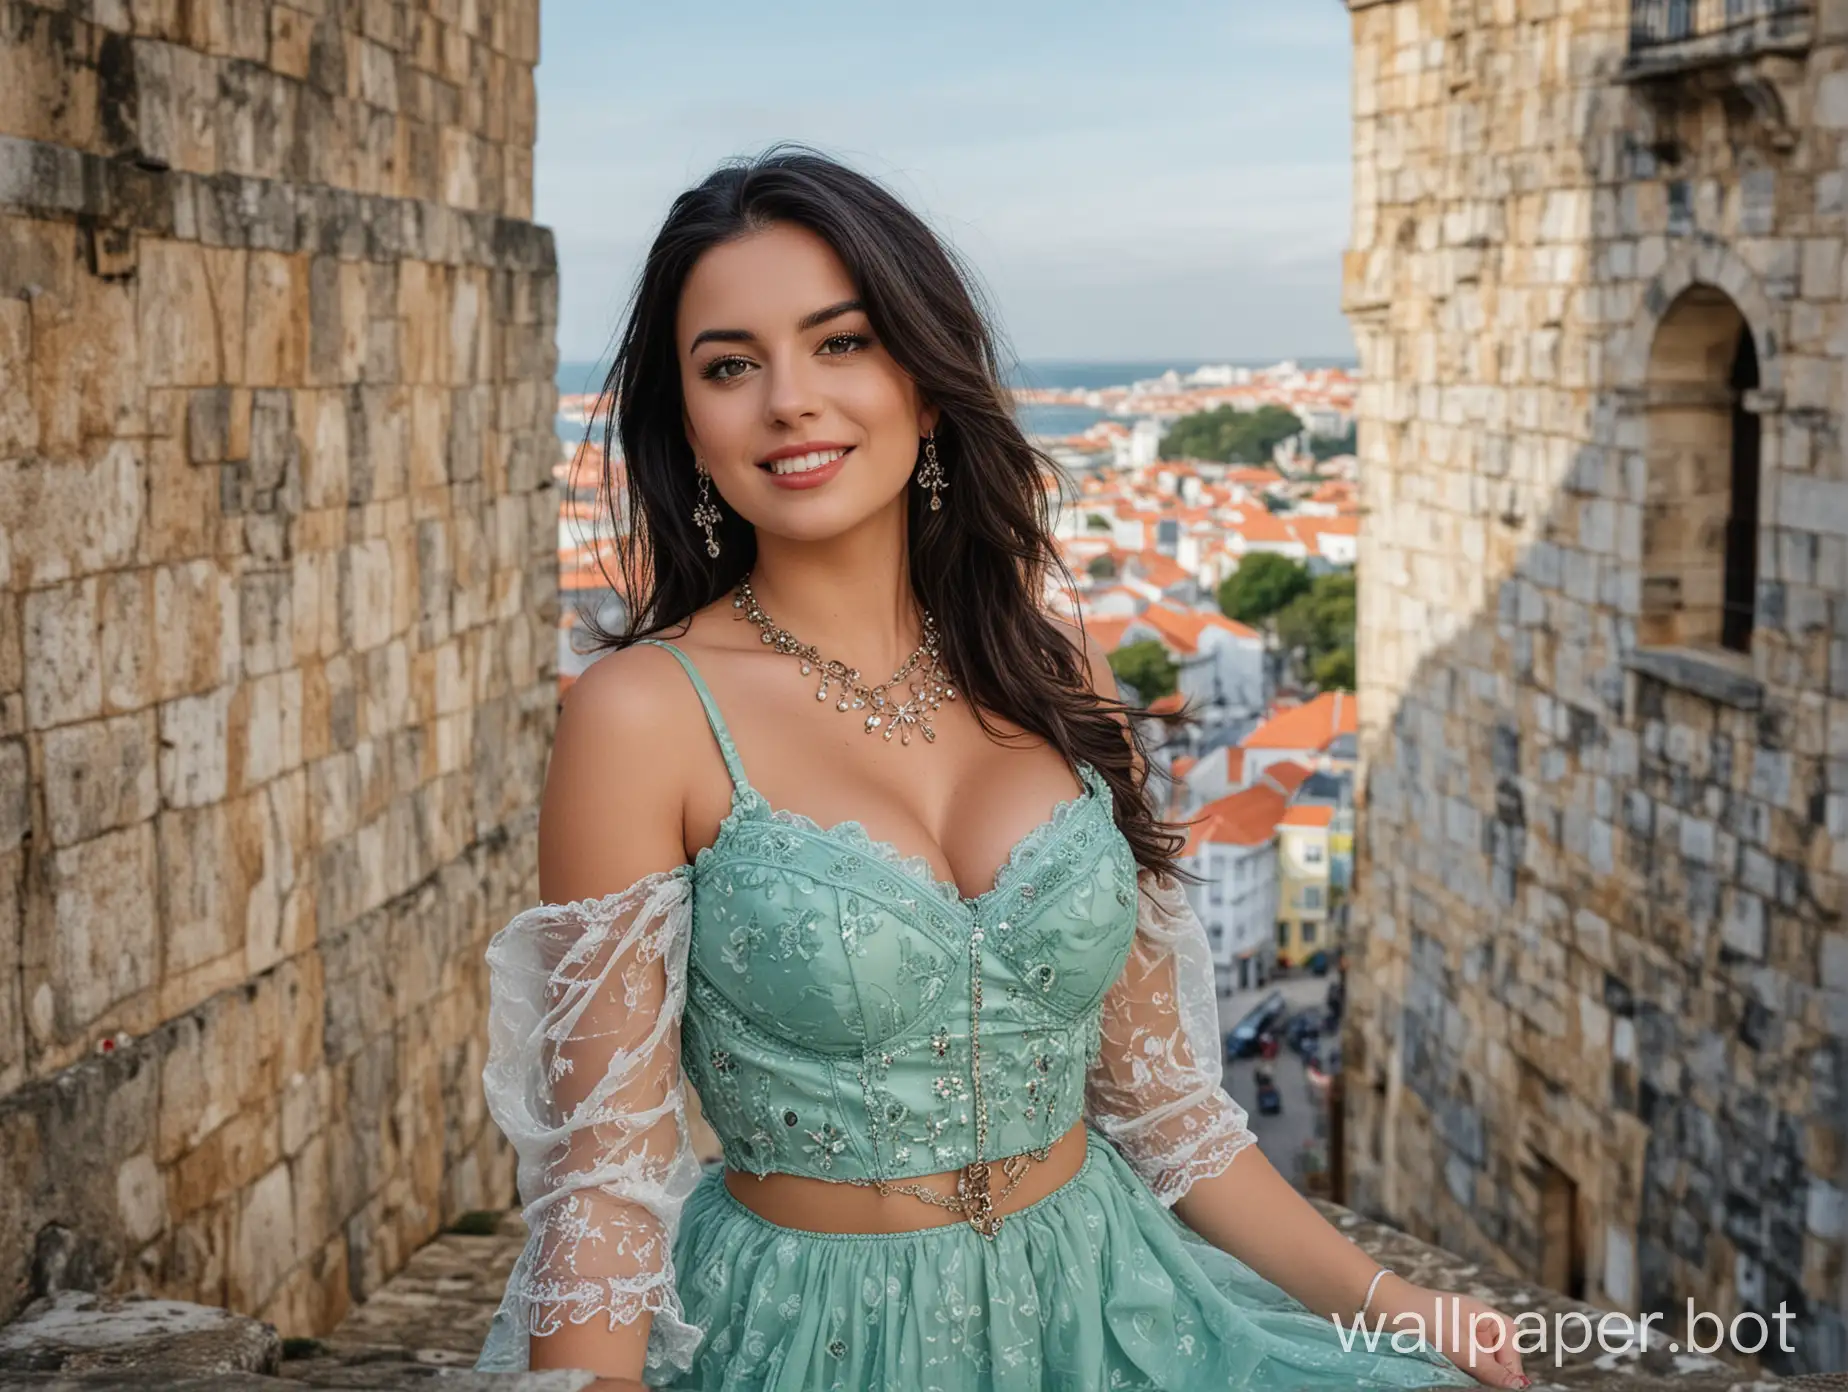 Glamorous-Cyan-Lingerie-Portrait-of-Stunning-Lisbon-Actress